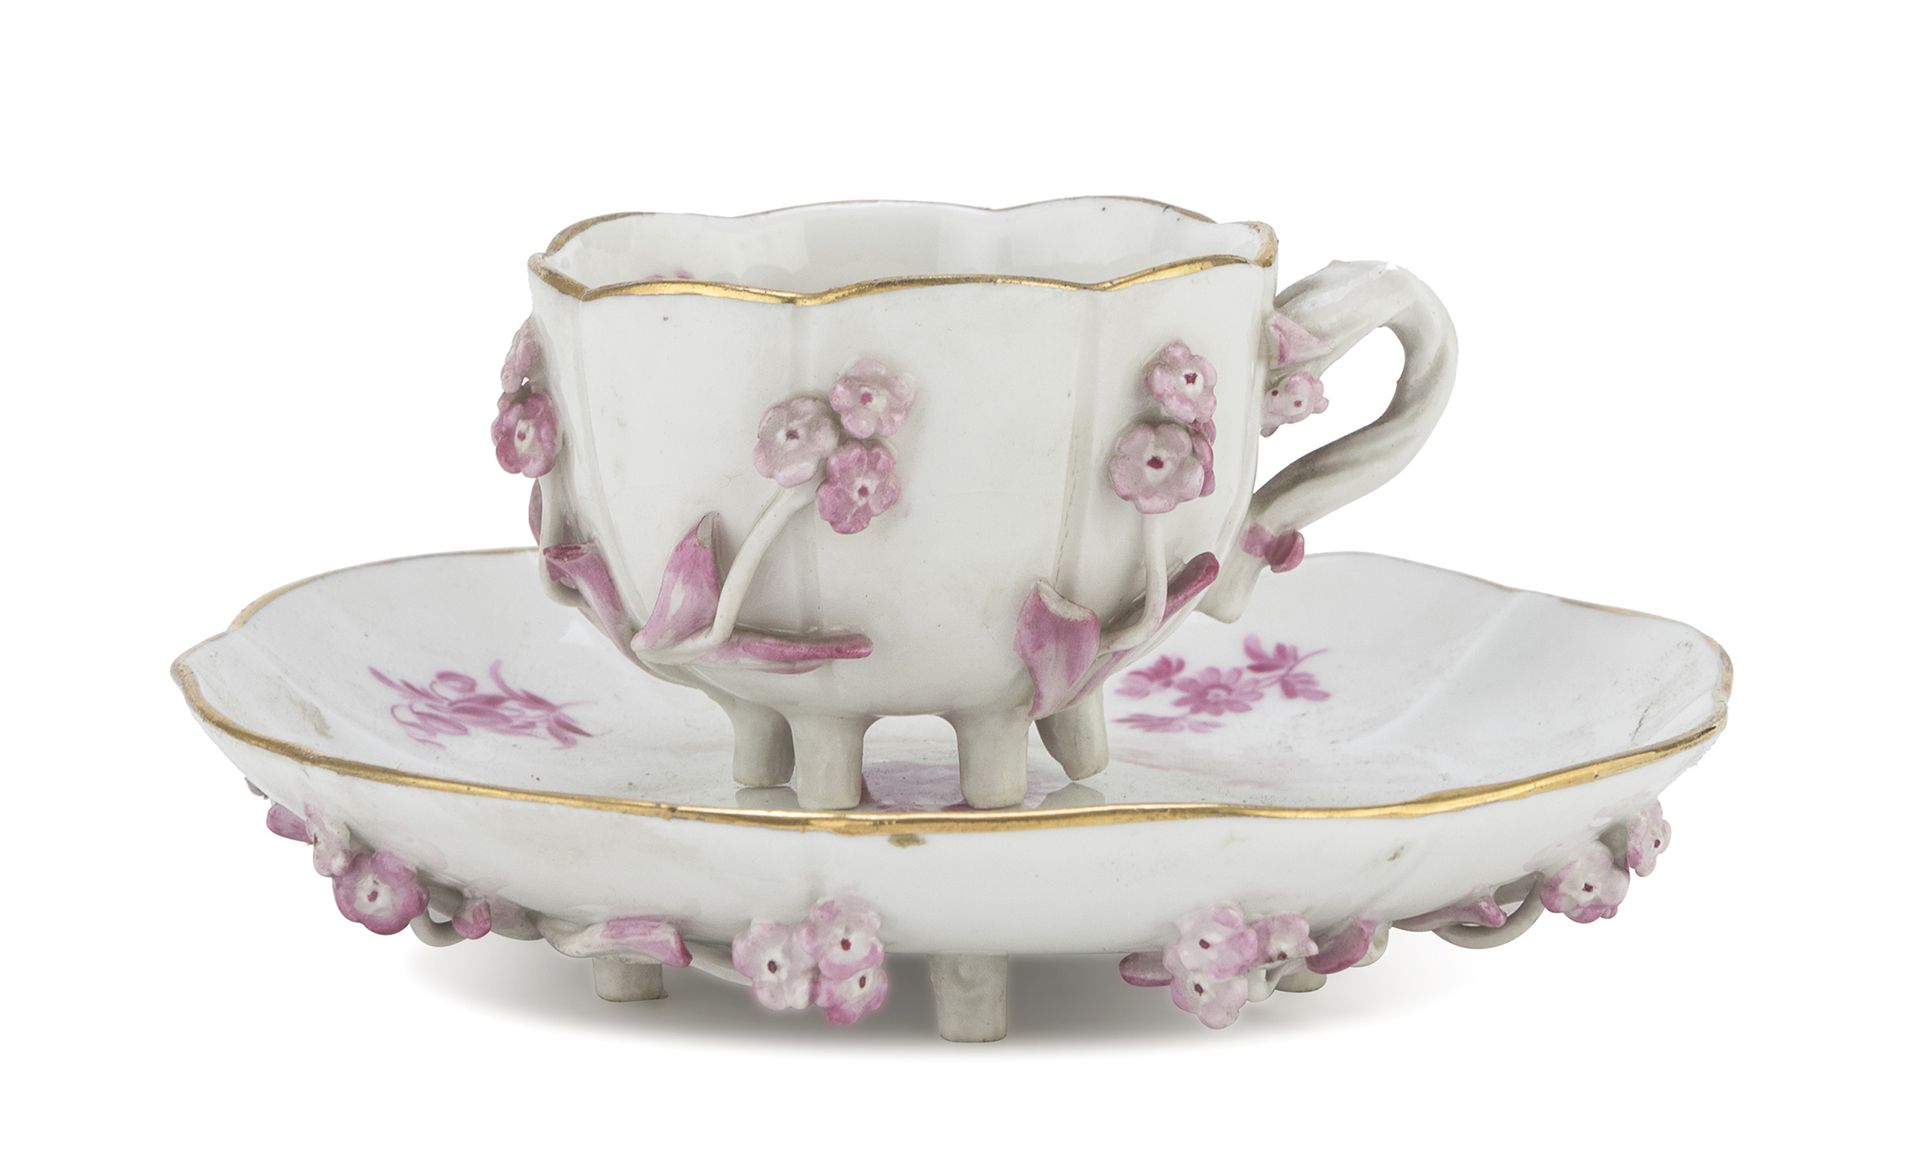 Null 瓷杯和碟子，可能是19世纪末的巴黎

粉红色的珐琅，杯身有浮雕的花卉装饰。

品牌名称为蓝色。

杯子大小为5 x 6 x 8厘米。